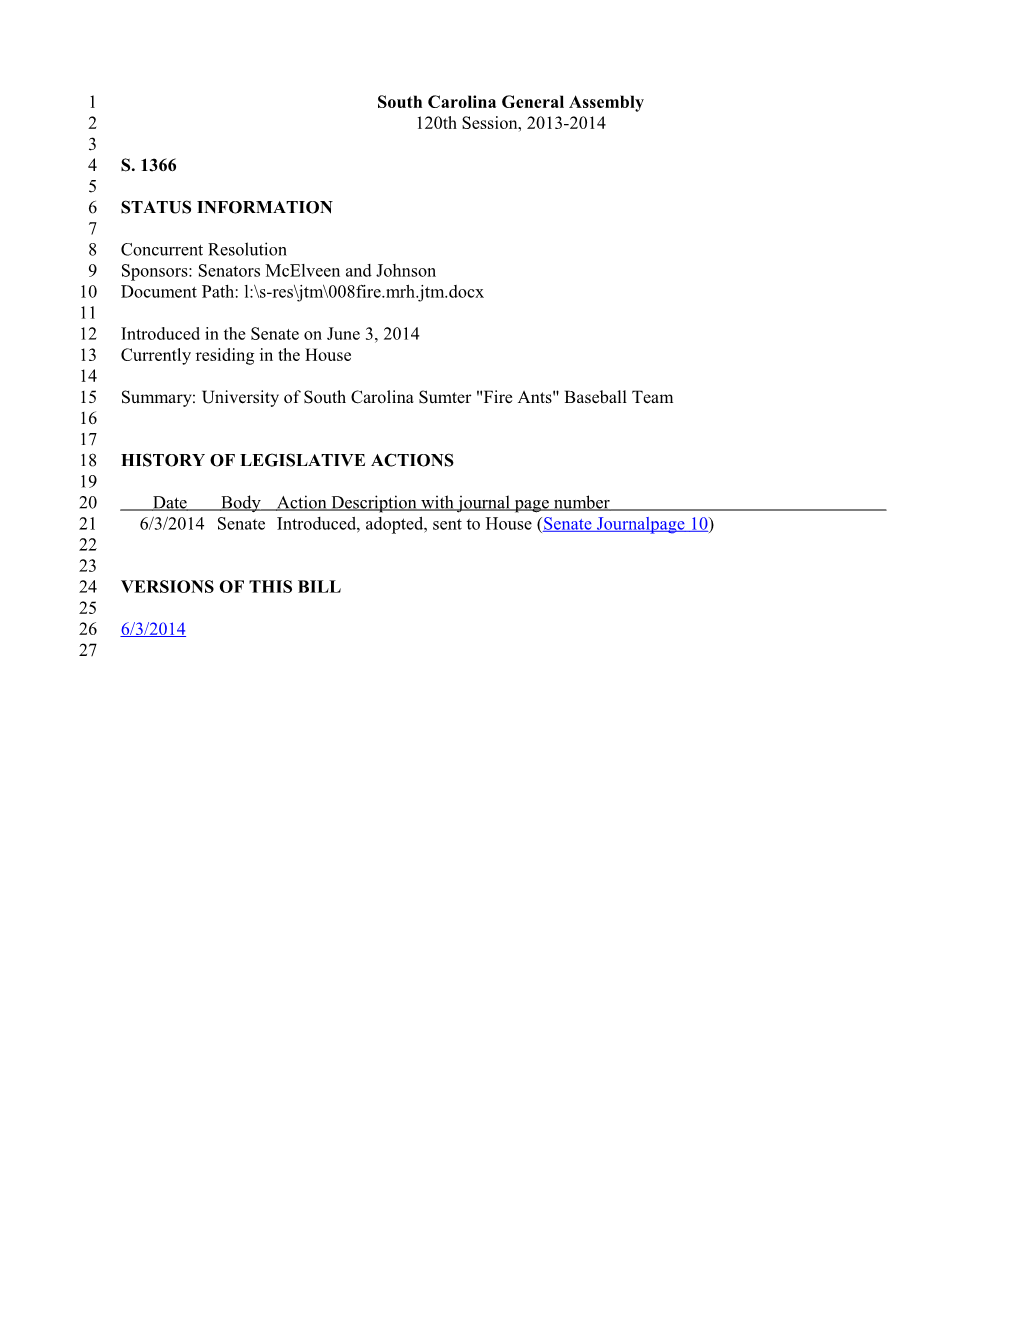 2013-2014 Bill 1366: University of South Carolina Sumter Fire Ants Baseball Team - South